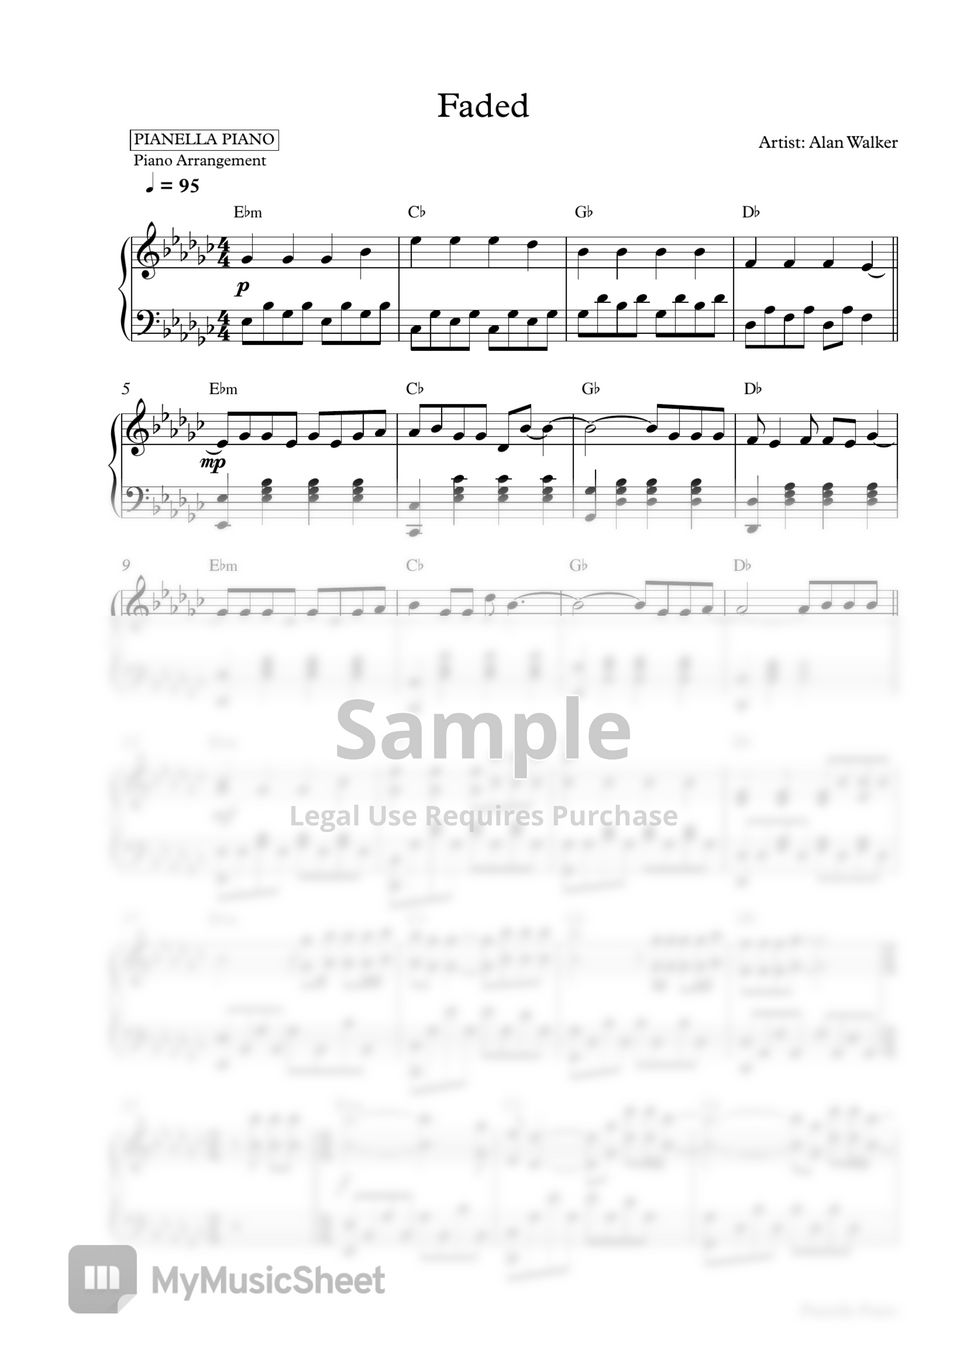 Alan Walker - Faded (Piano Sheet) by Pianella Piano